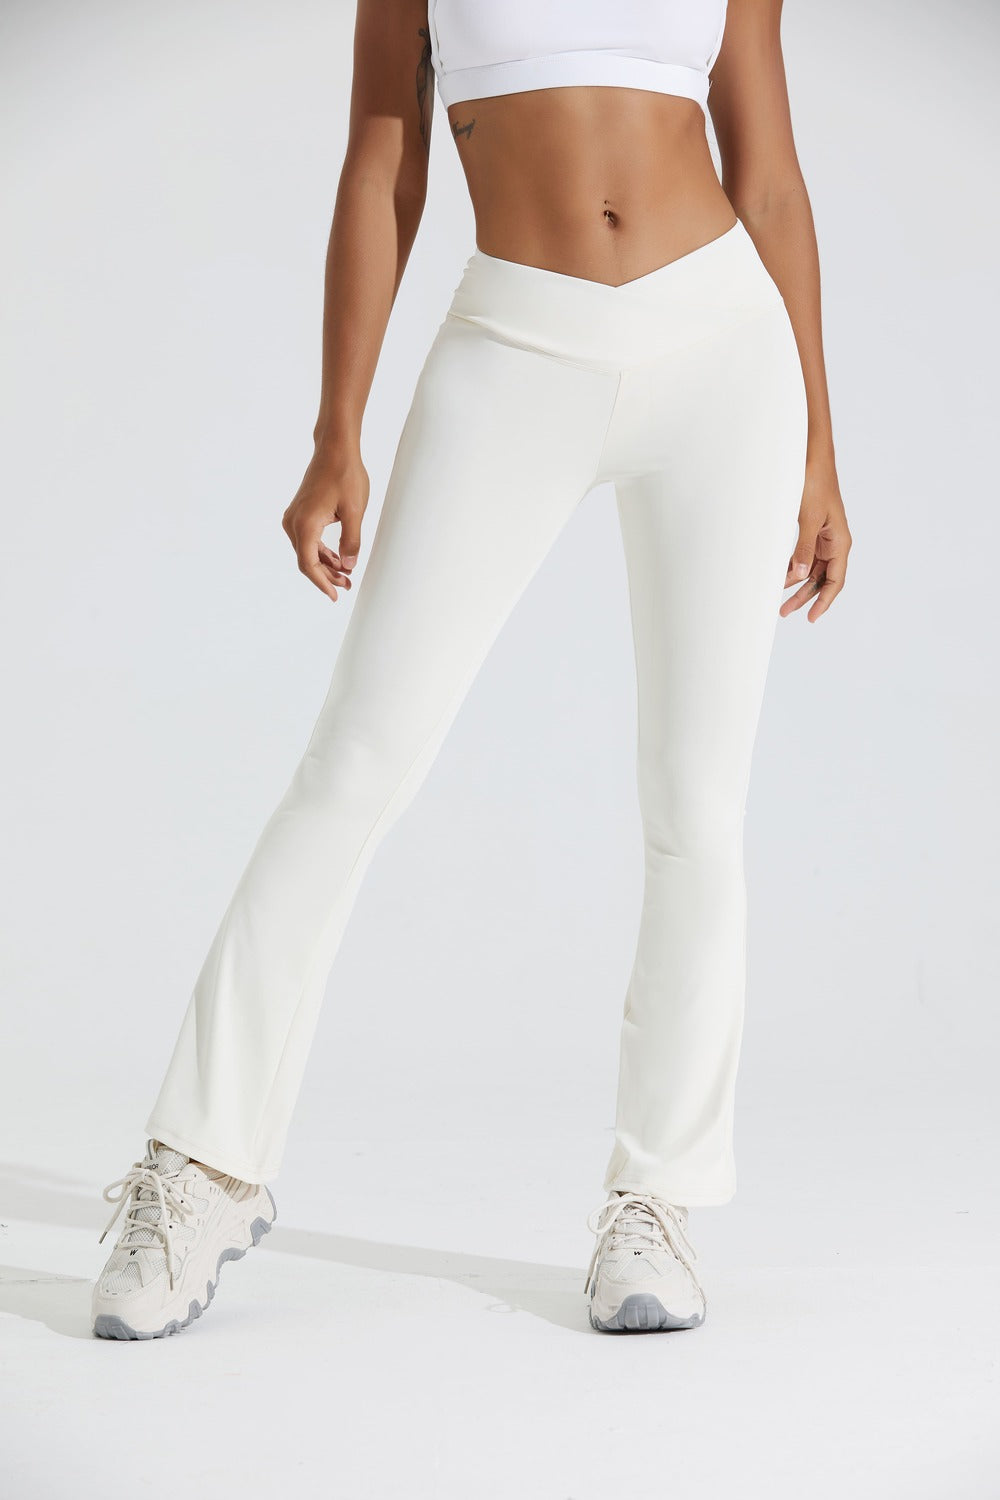 Flare Crossover Legging - LA7 ONLINE Activewear White / XL